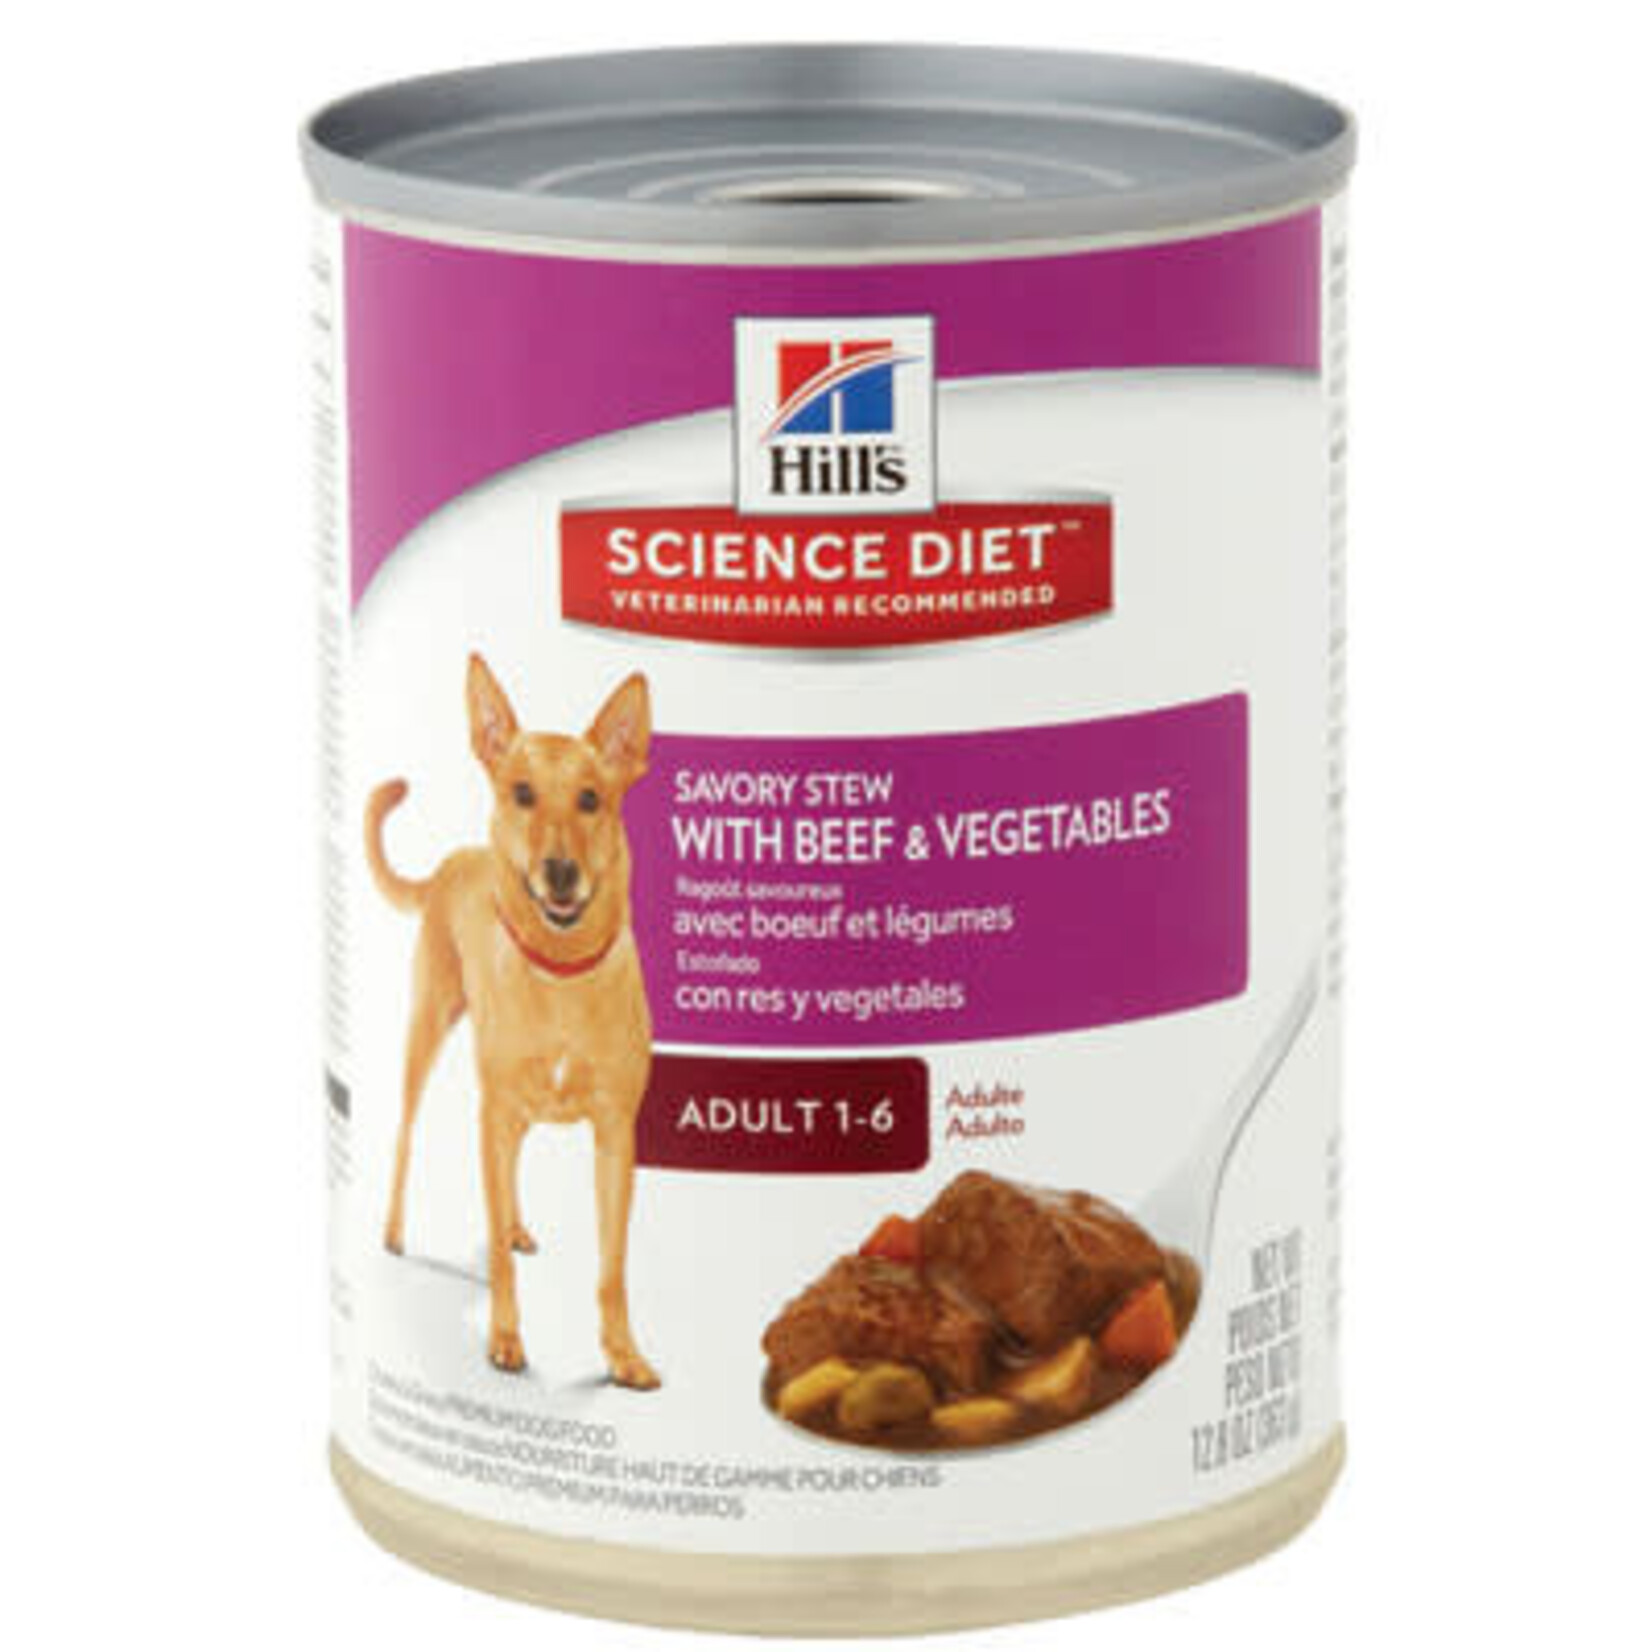 Science Diet Science Diet Adult 1-6 Savory Stew 12.8oz Canned Dog Food